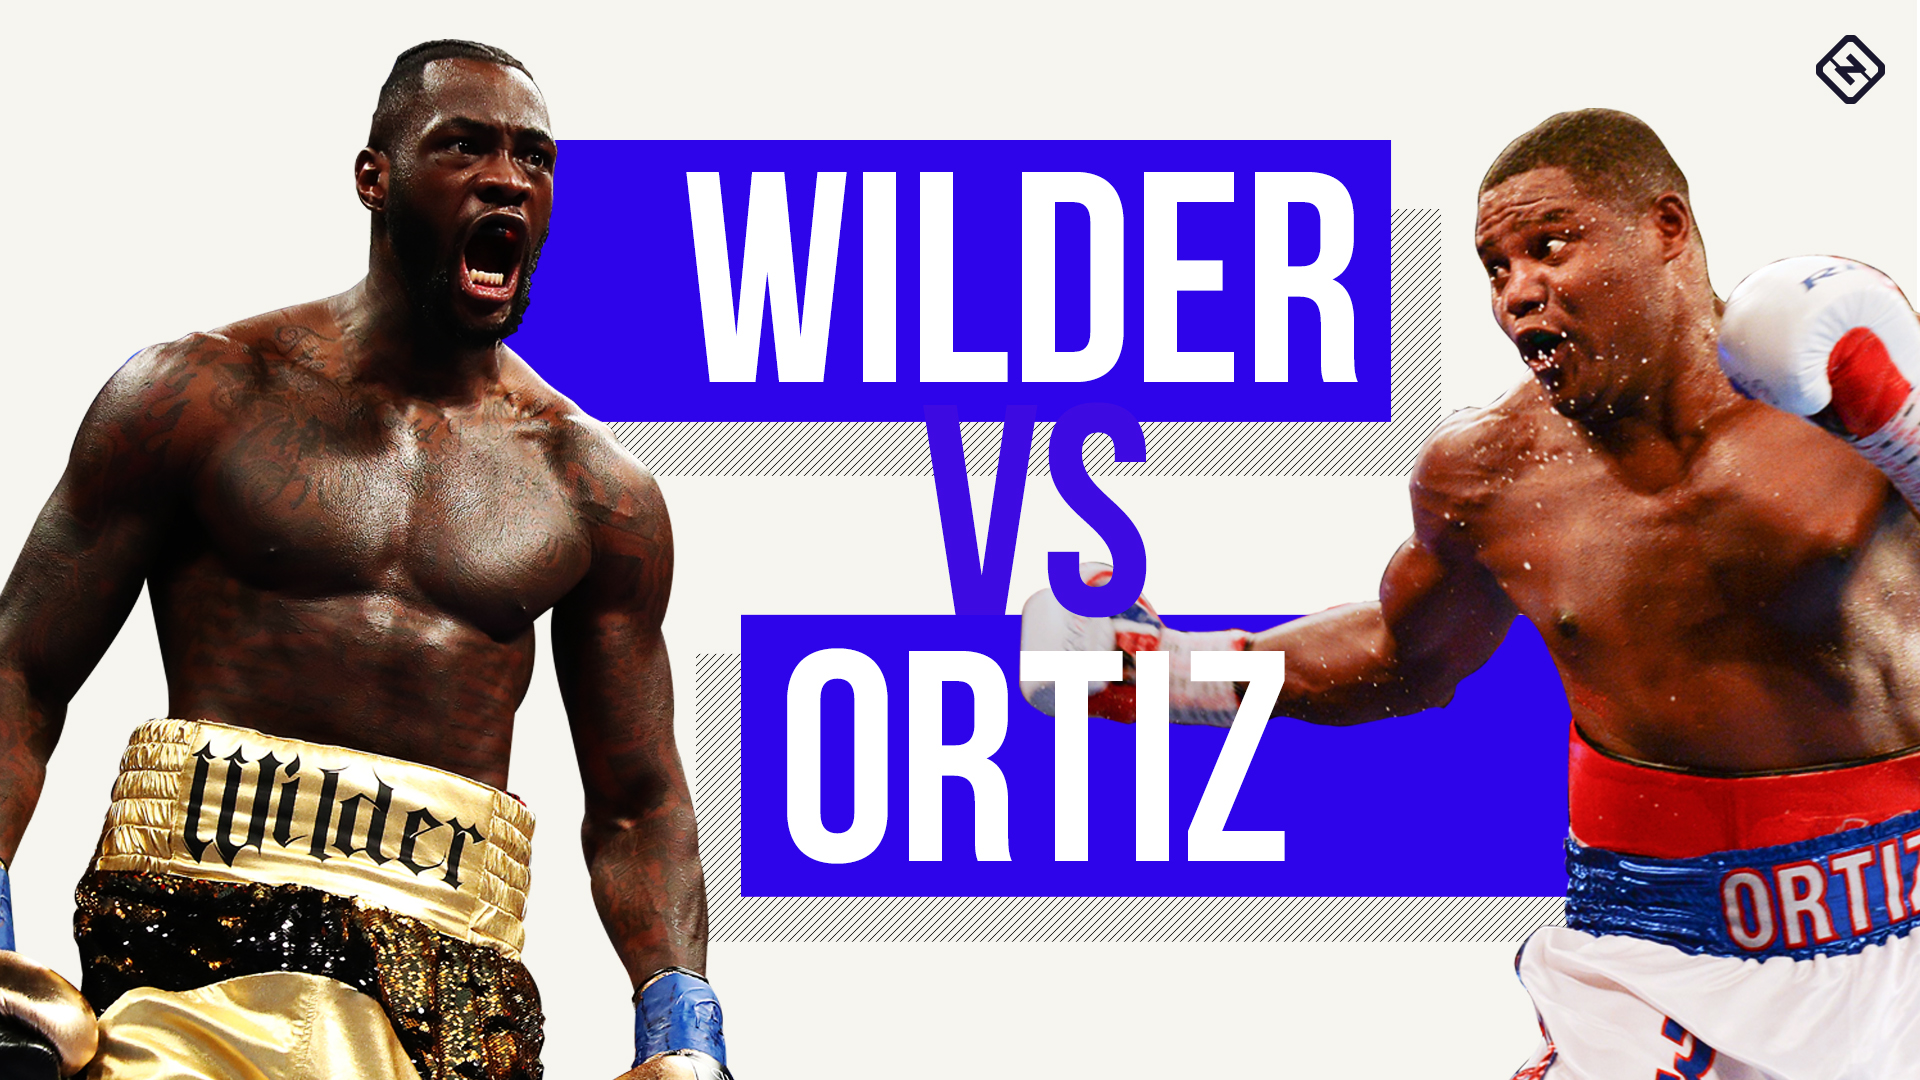 Wilder vs. Ortiz results: Deontay Wilder retains vs. Luis Ortiz in wildly exciting fight